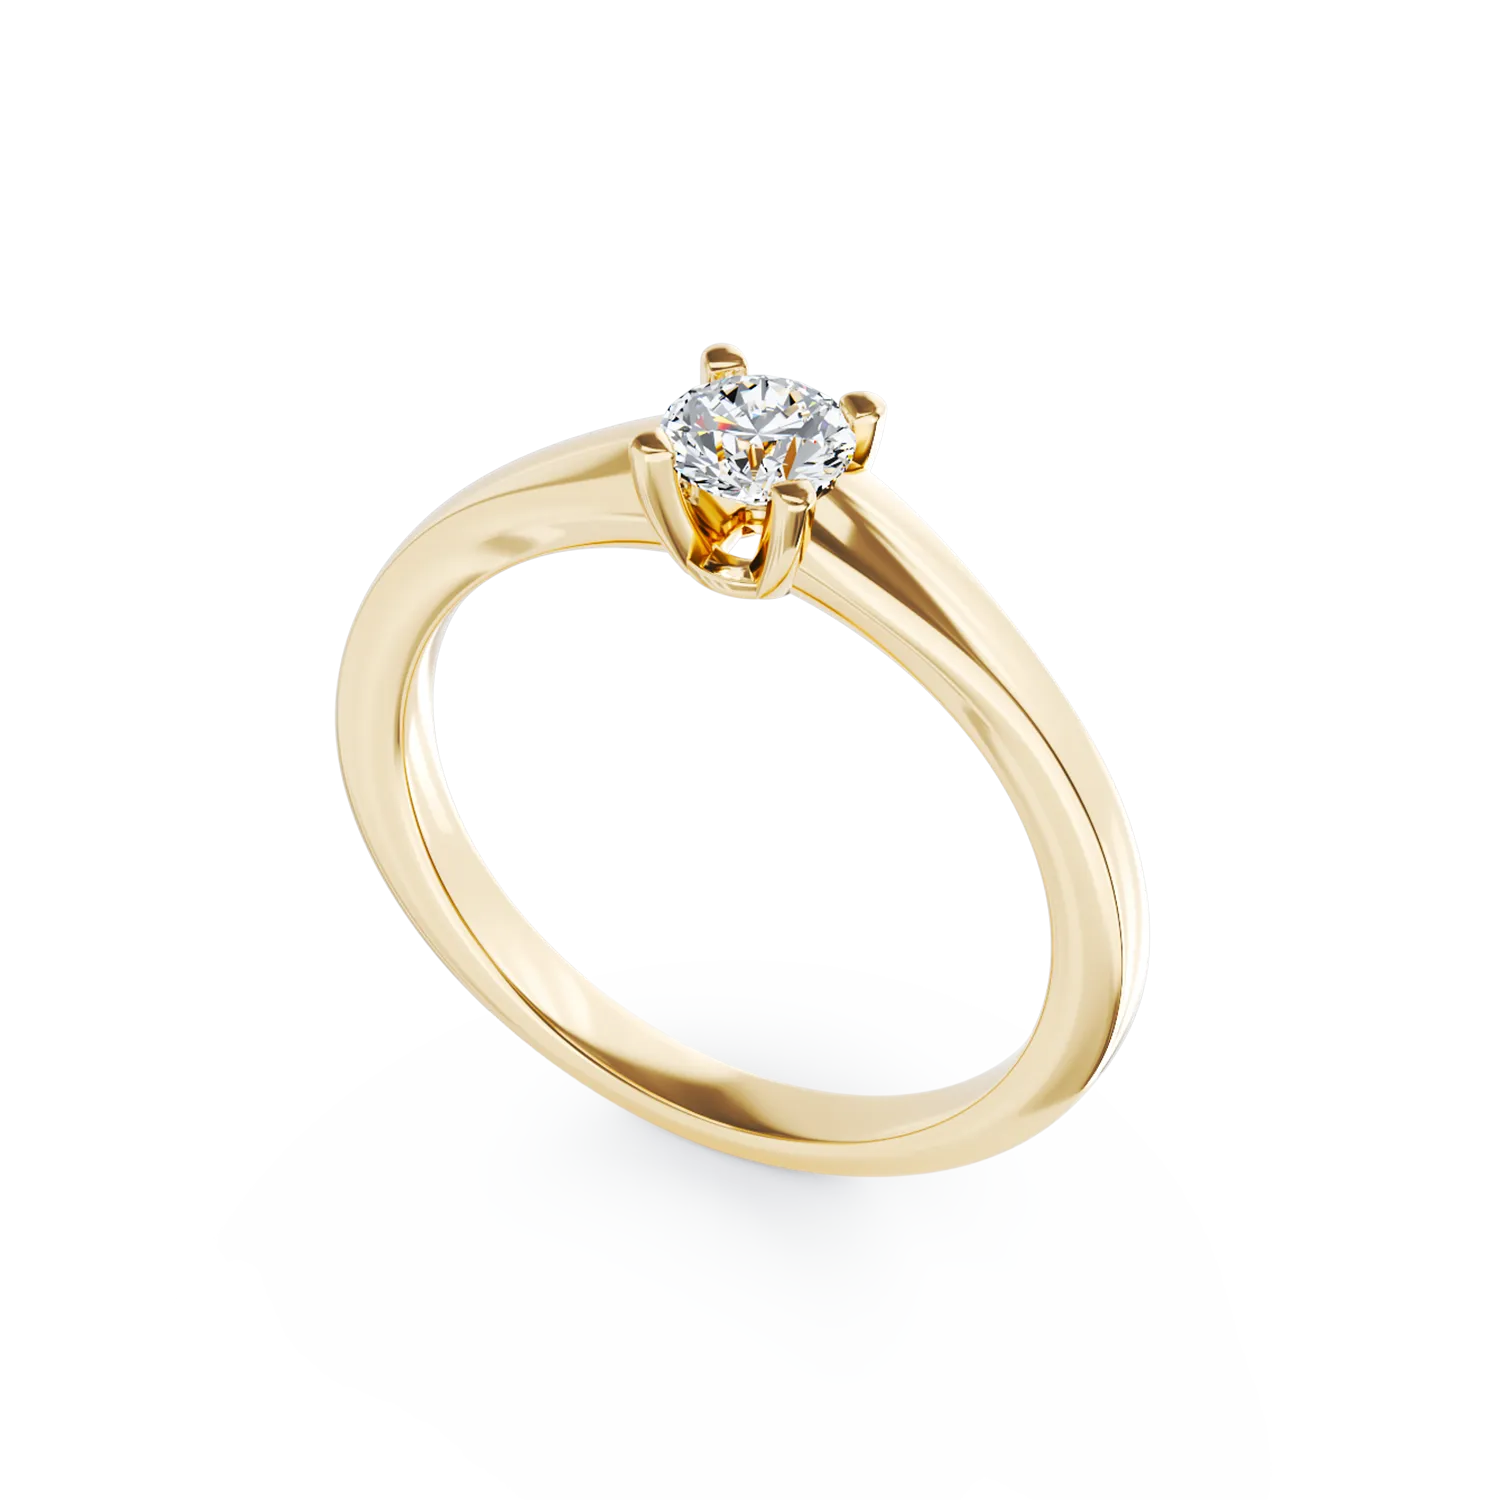 Inel de logodna din aur galben de 18K cu un diamant solitaire de 0.205ct